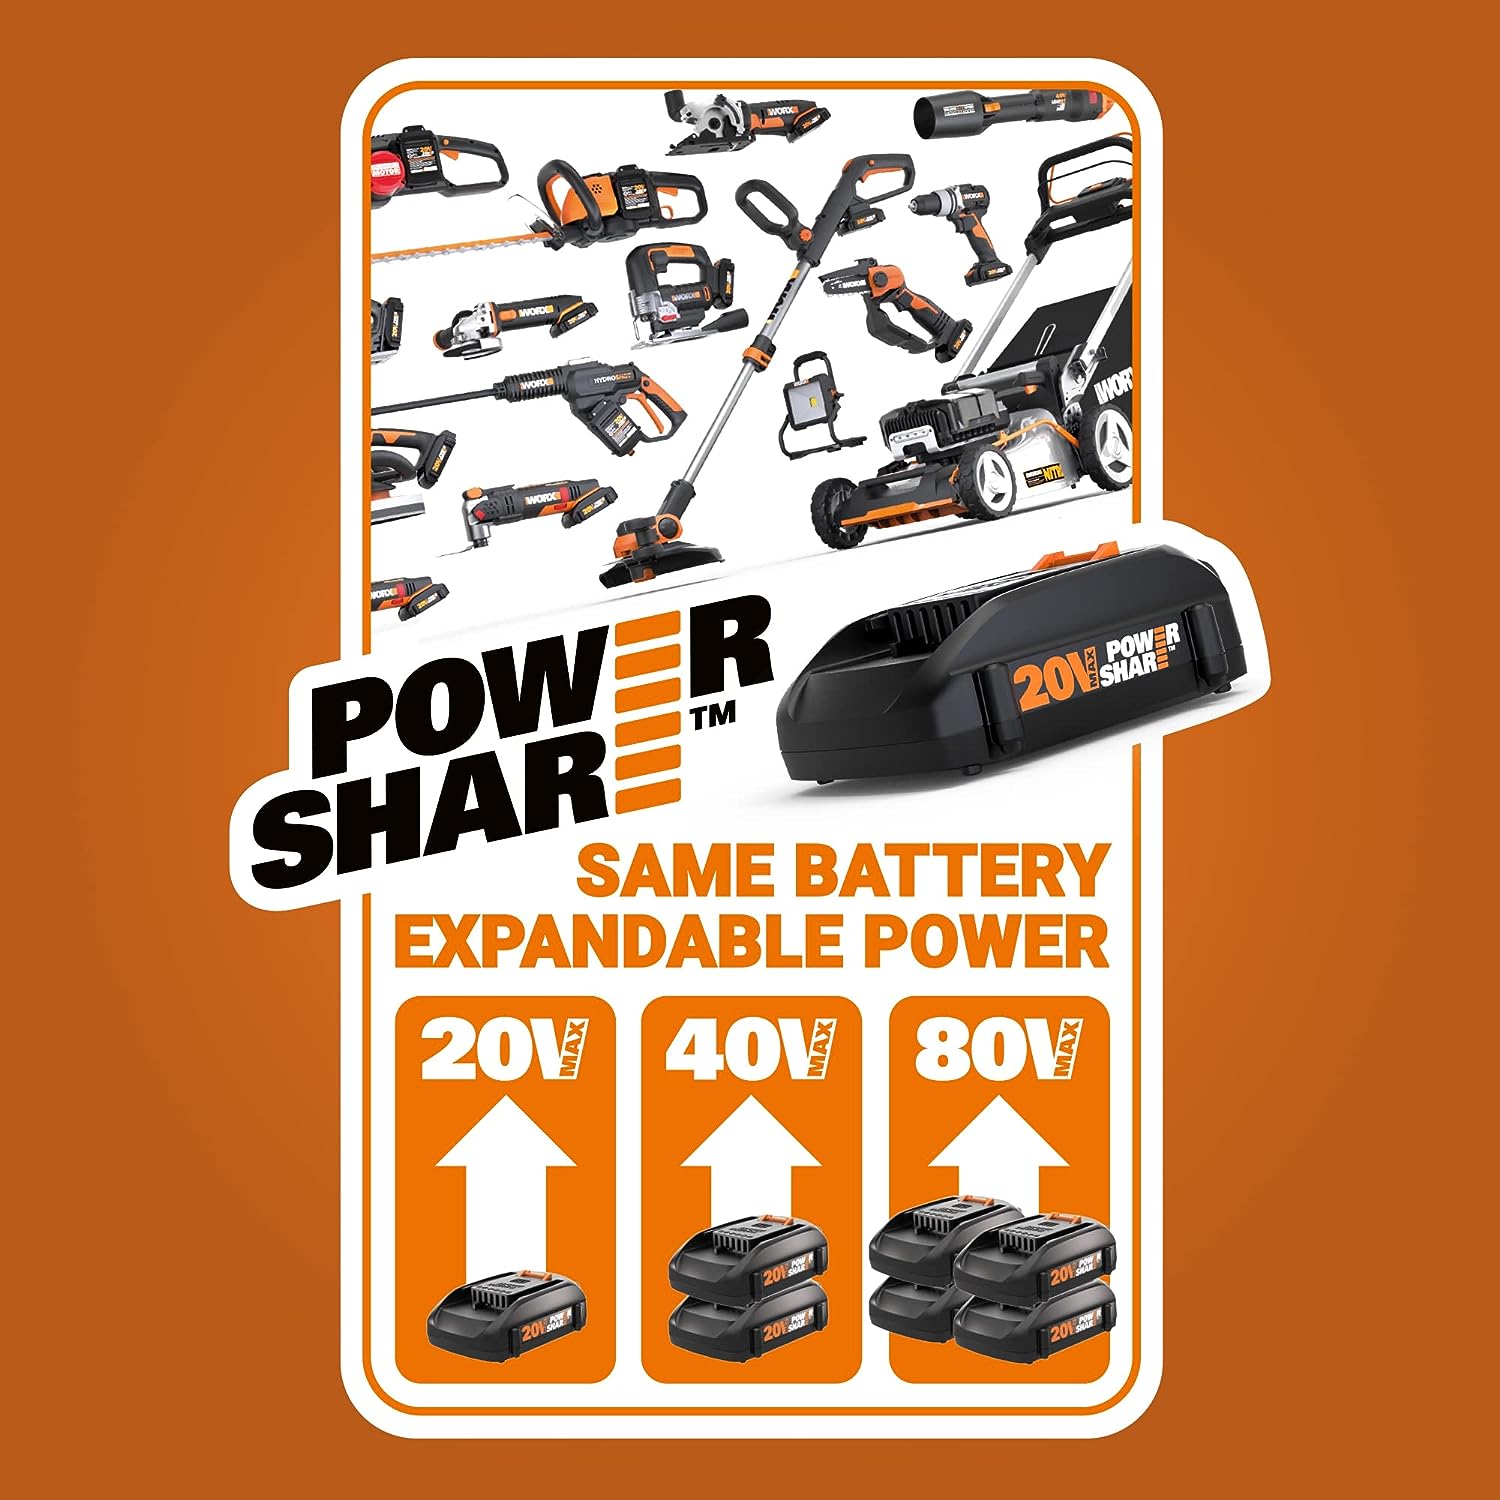 WORX WA3012 20V Power Share PRO 4.0Ah Lithium-Ion High-Capacity Battery, Black and Orange